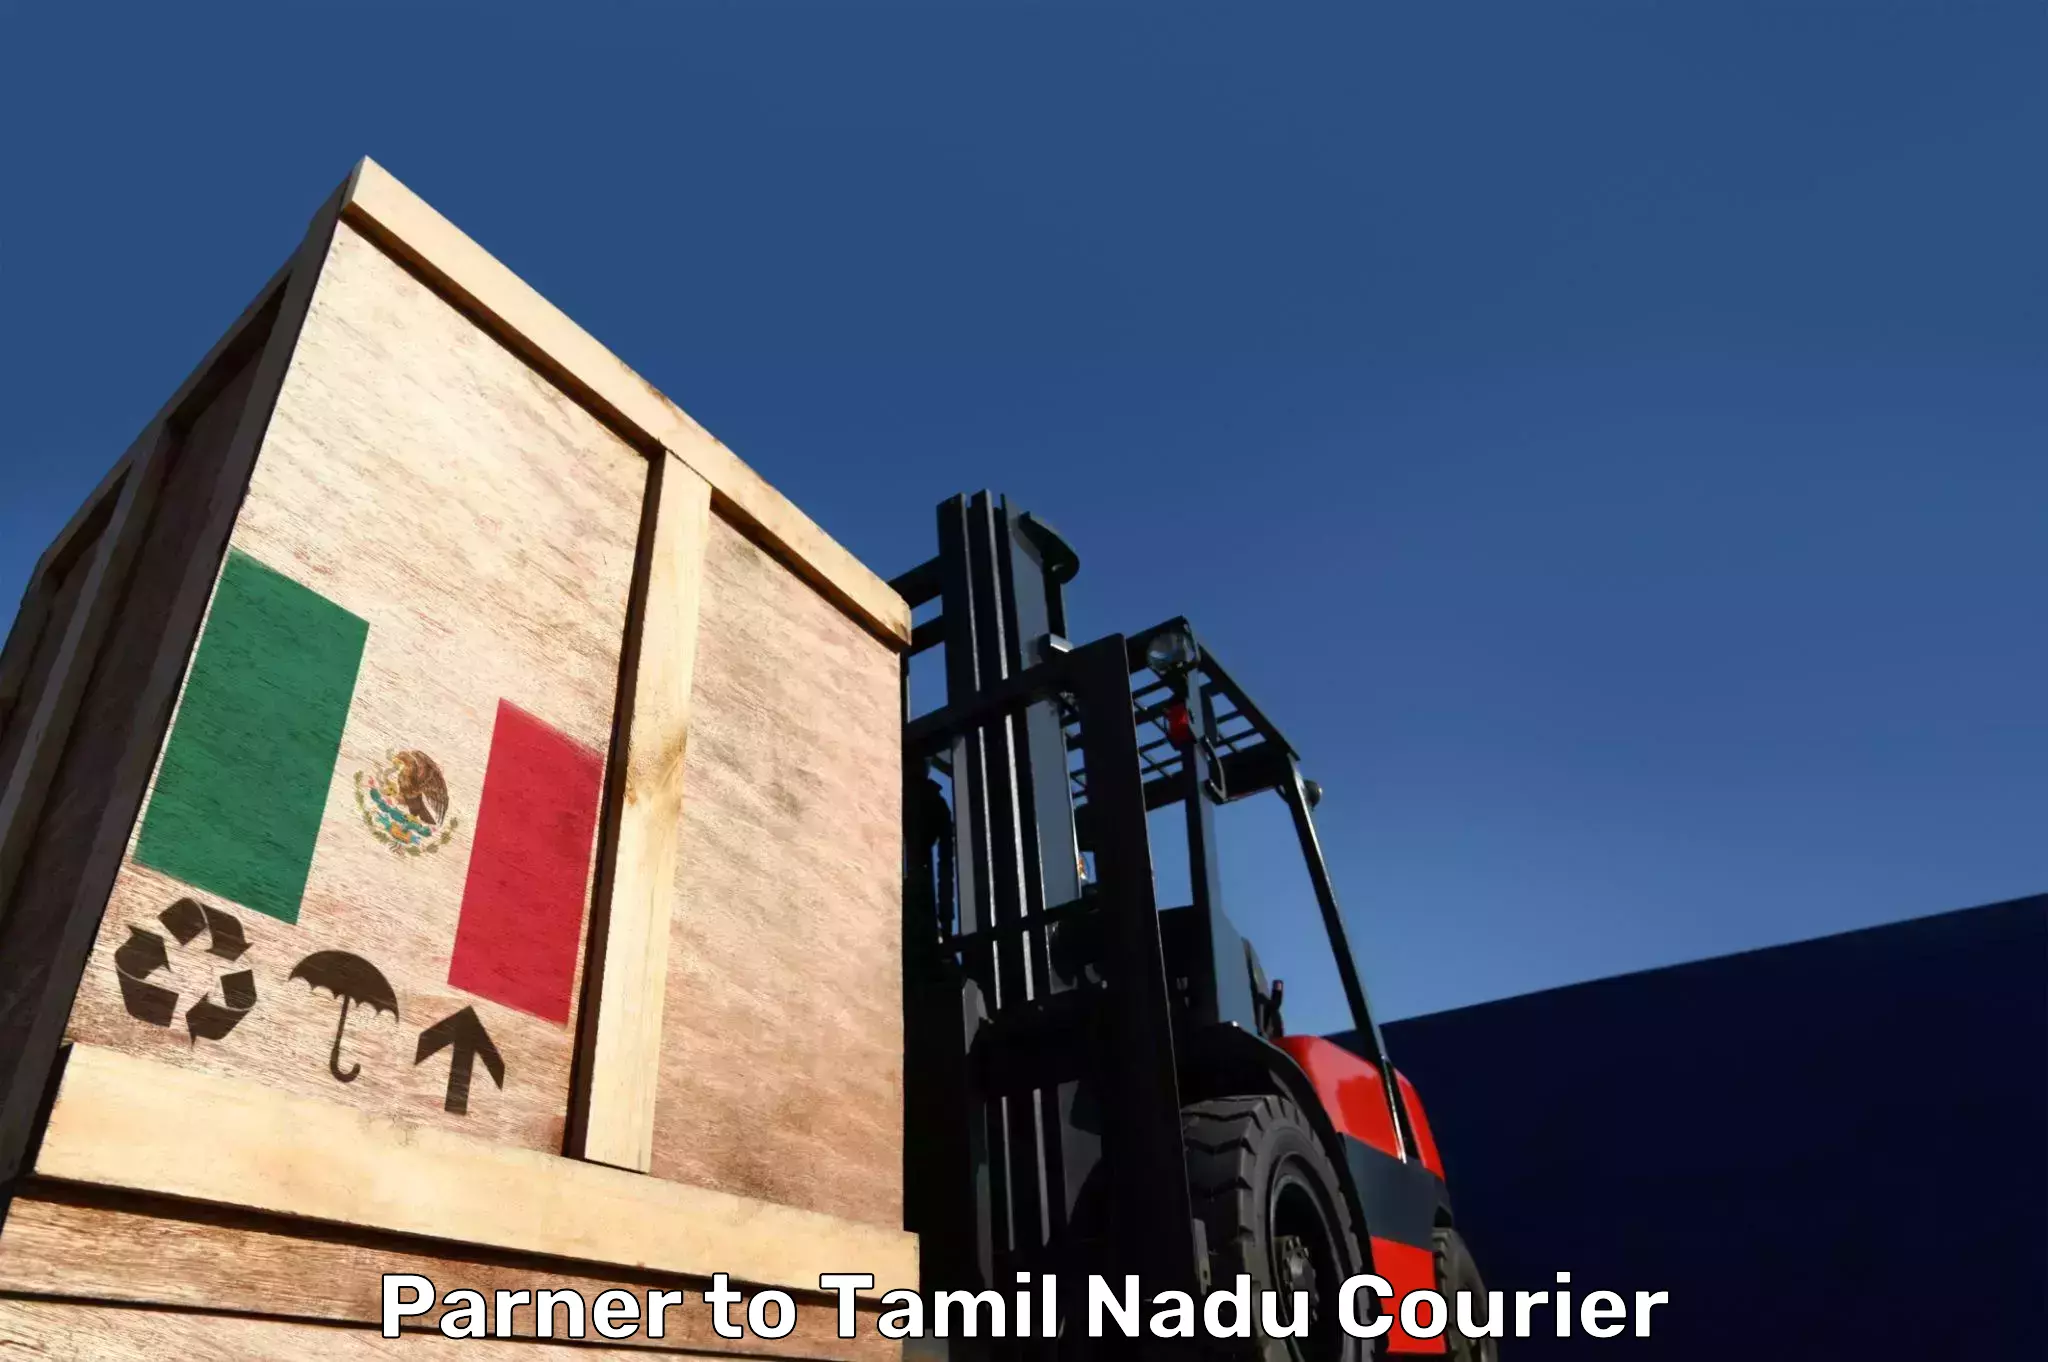 Baggage delivery technology Parner to Tamil Nadu